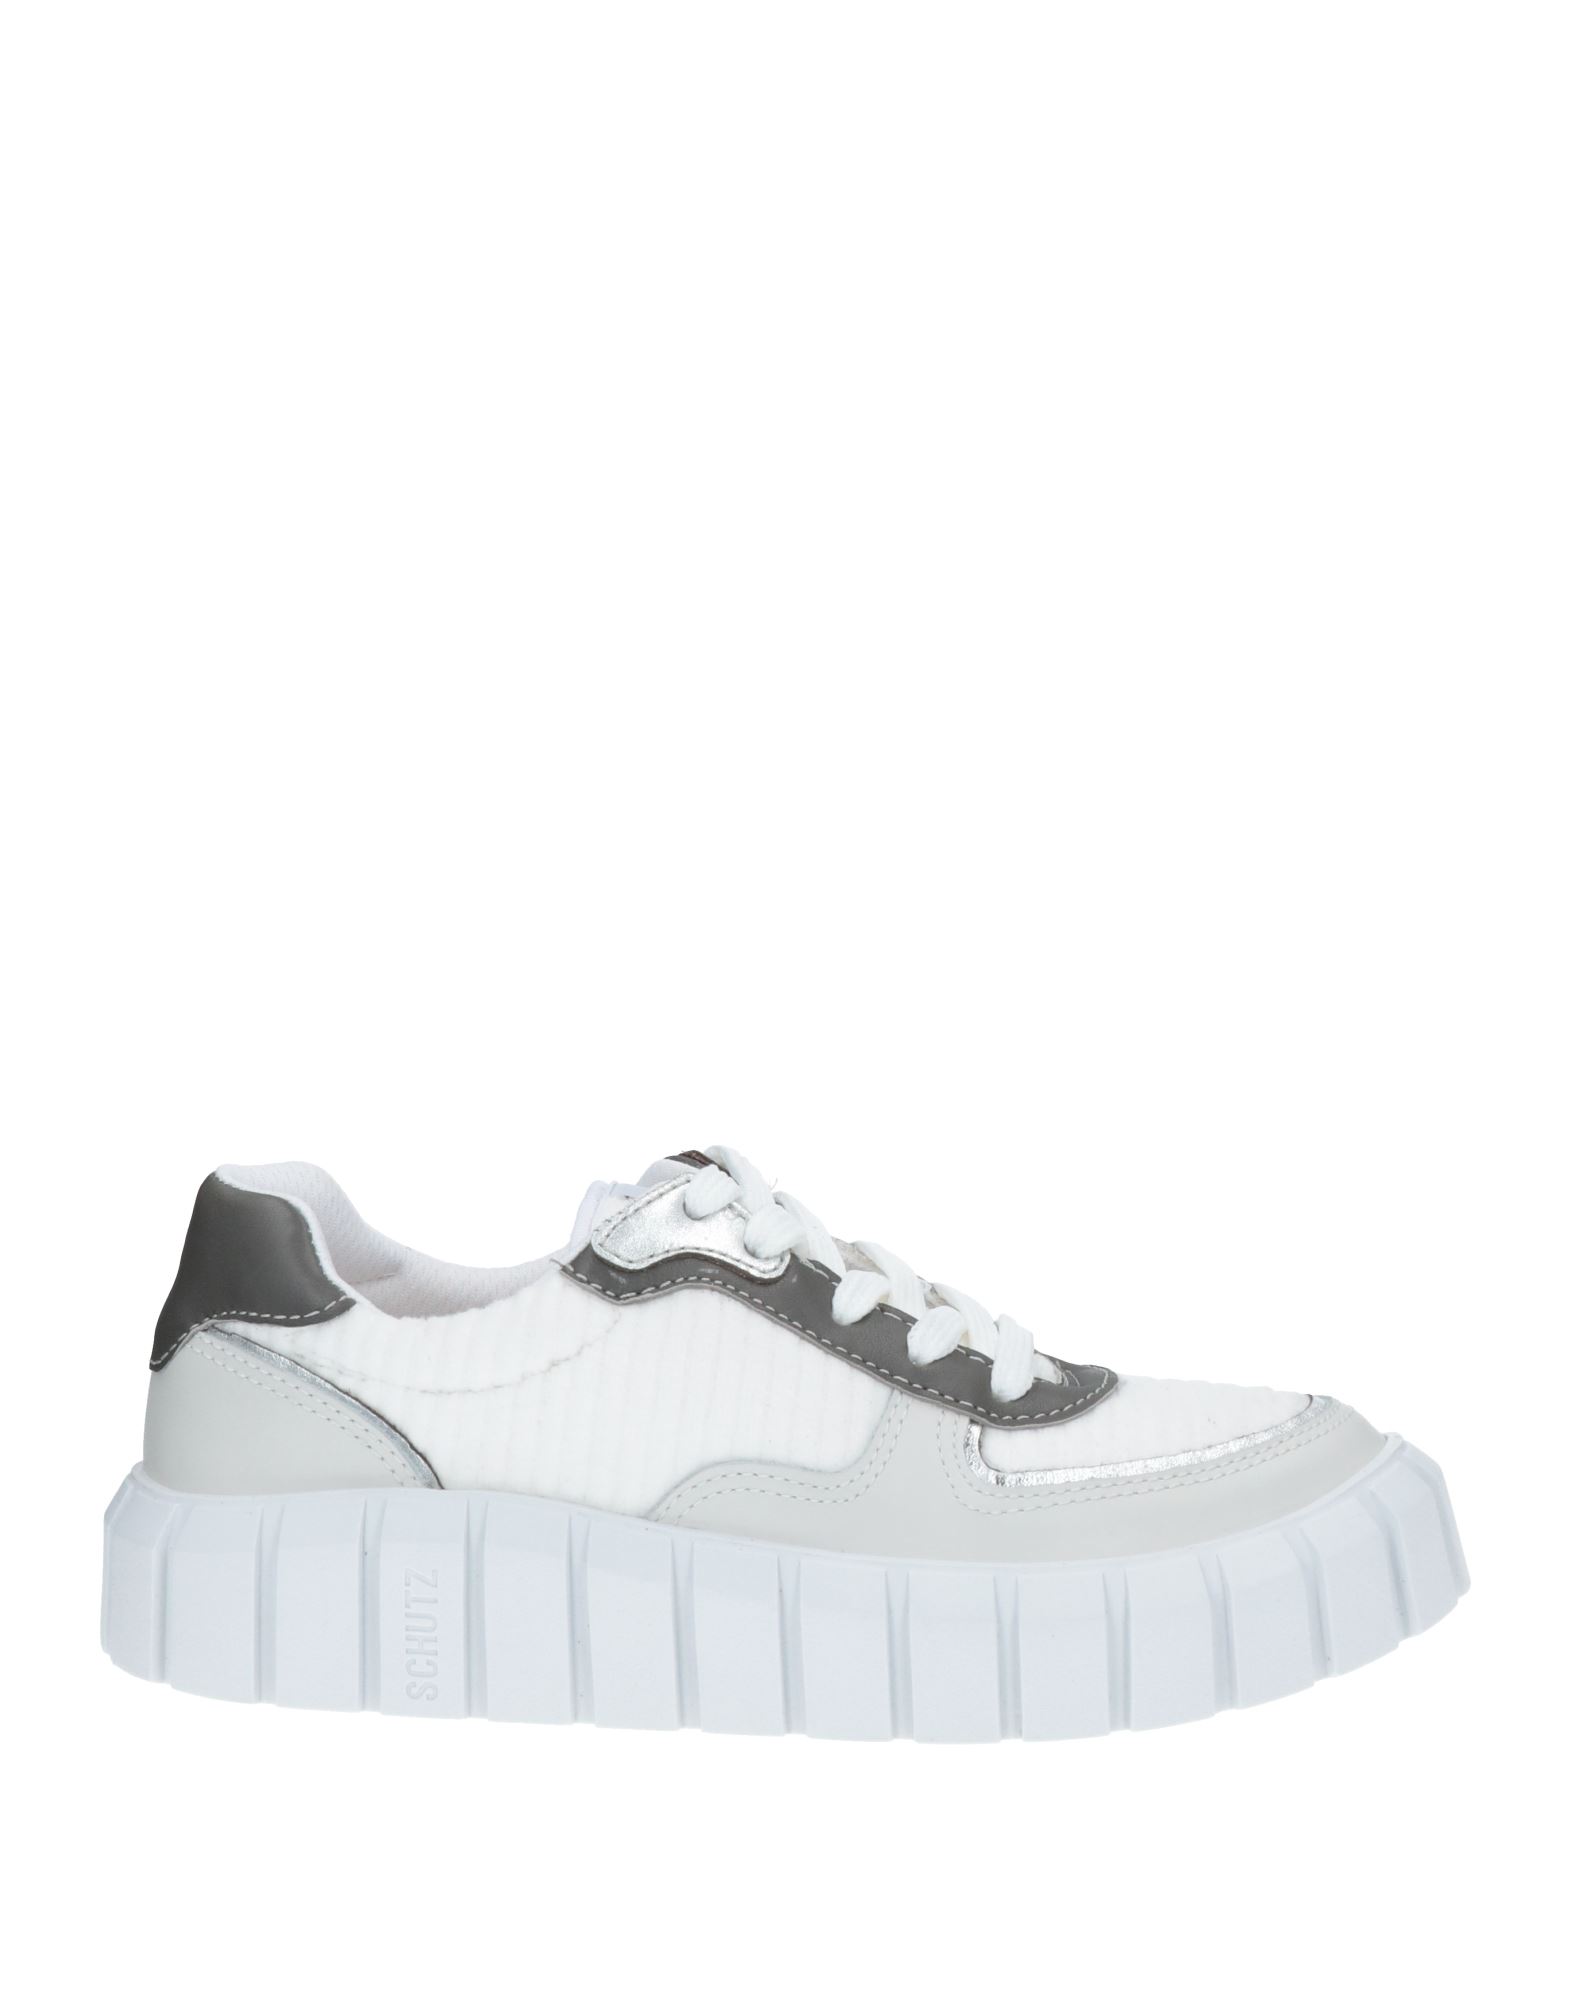 Schutz Sneakers In White